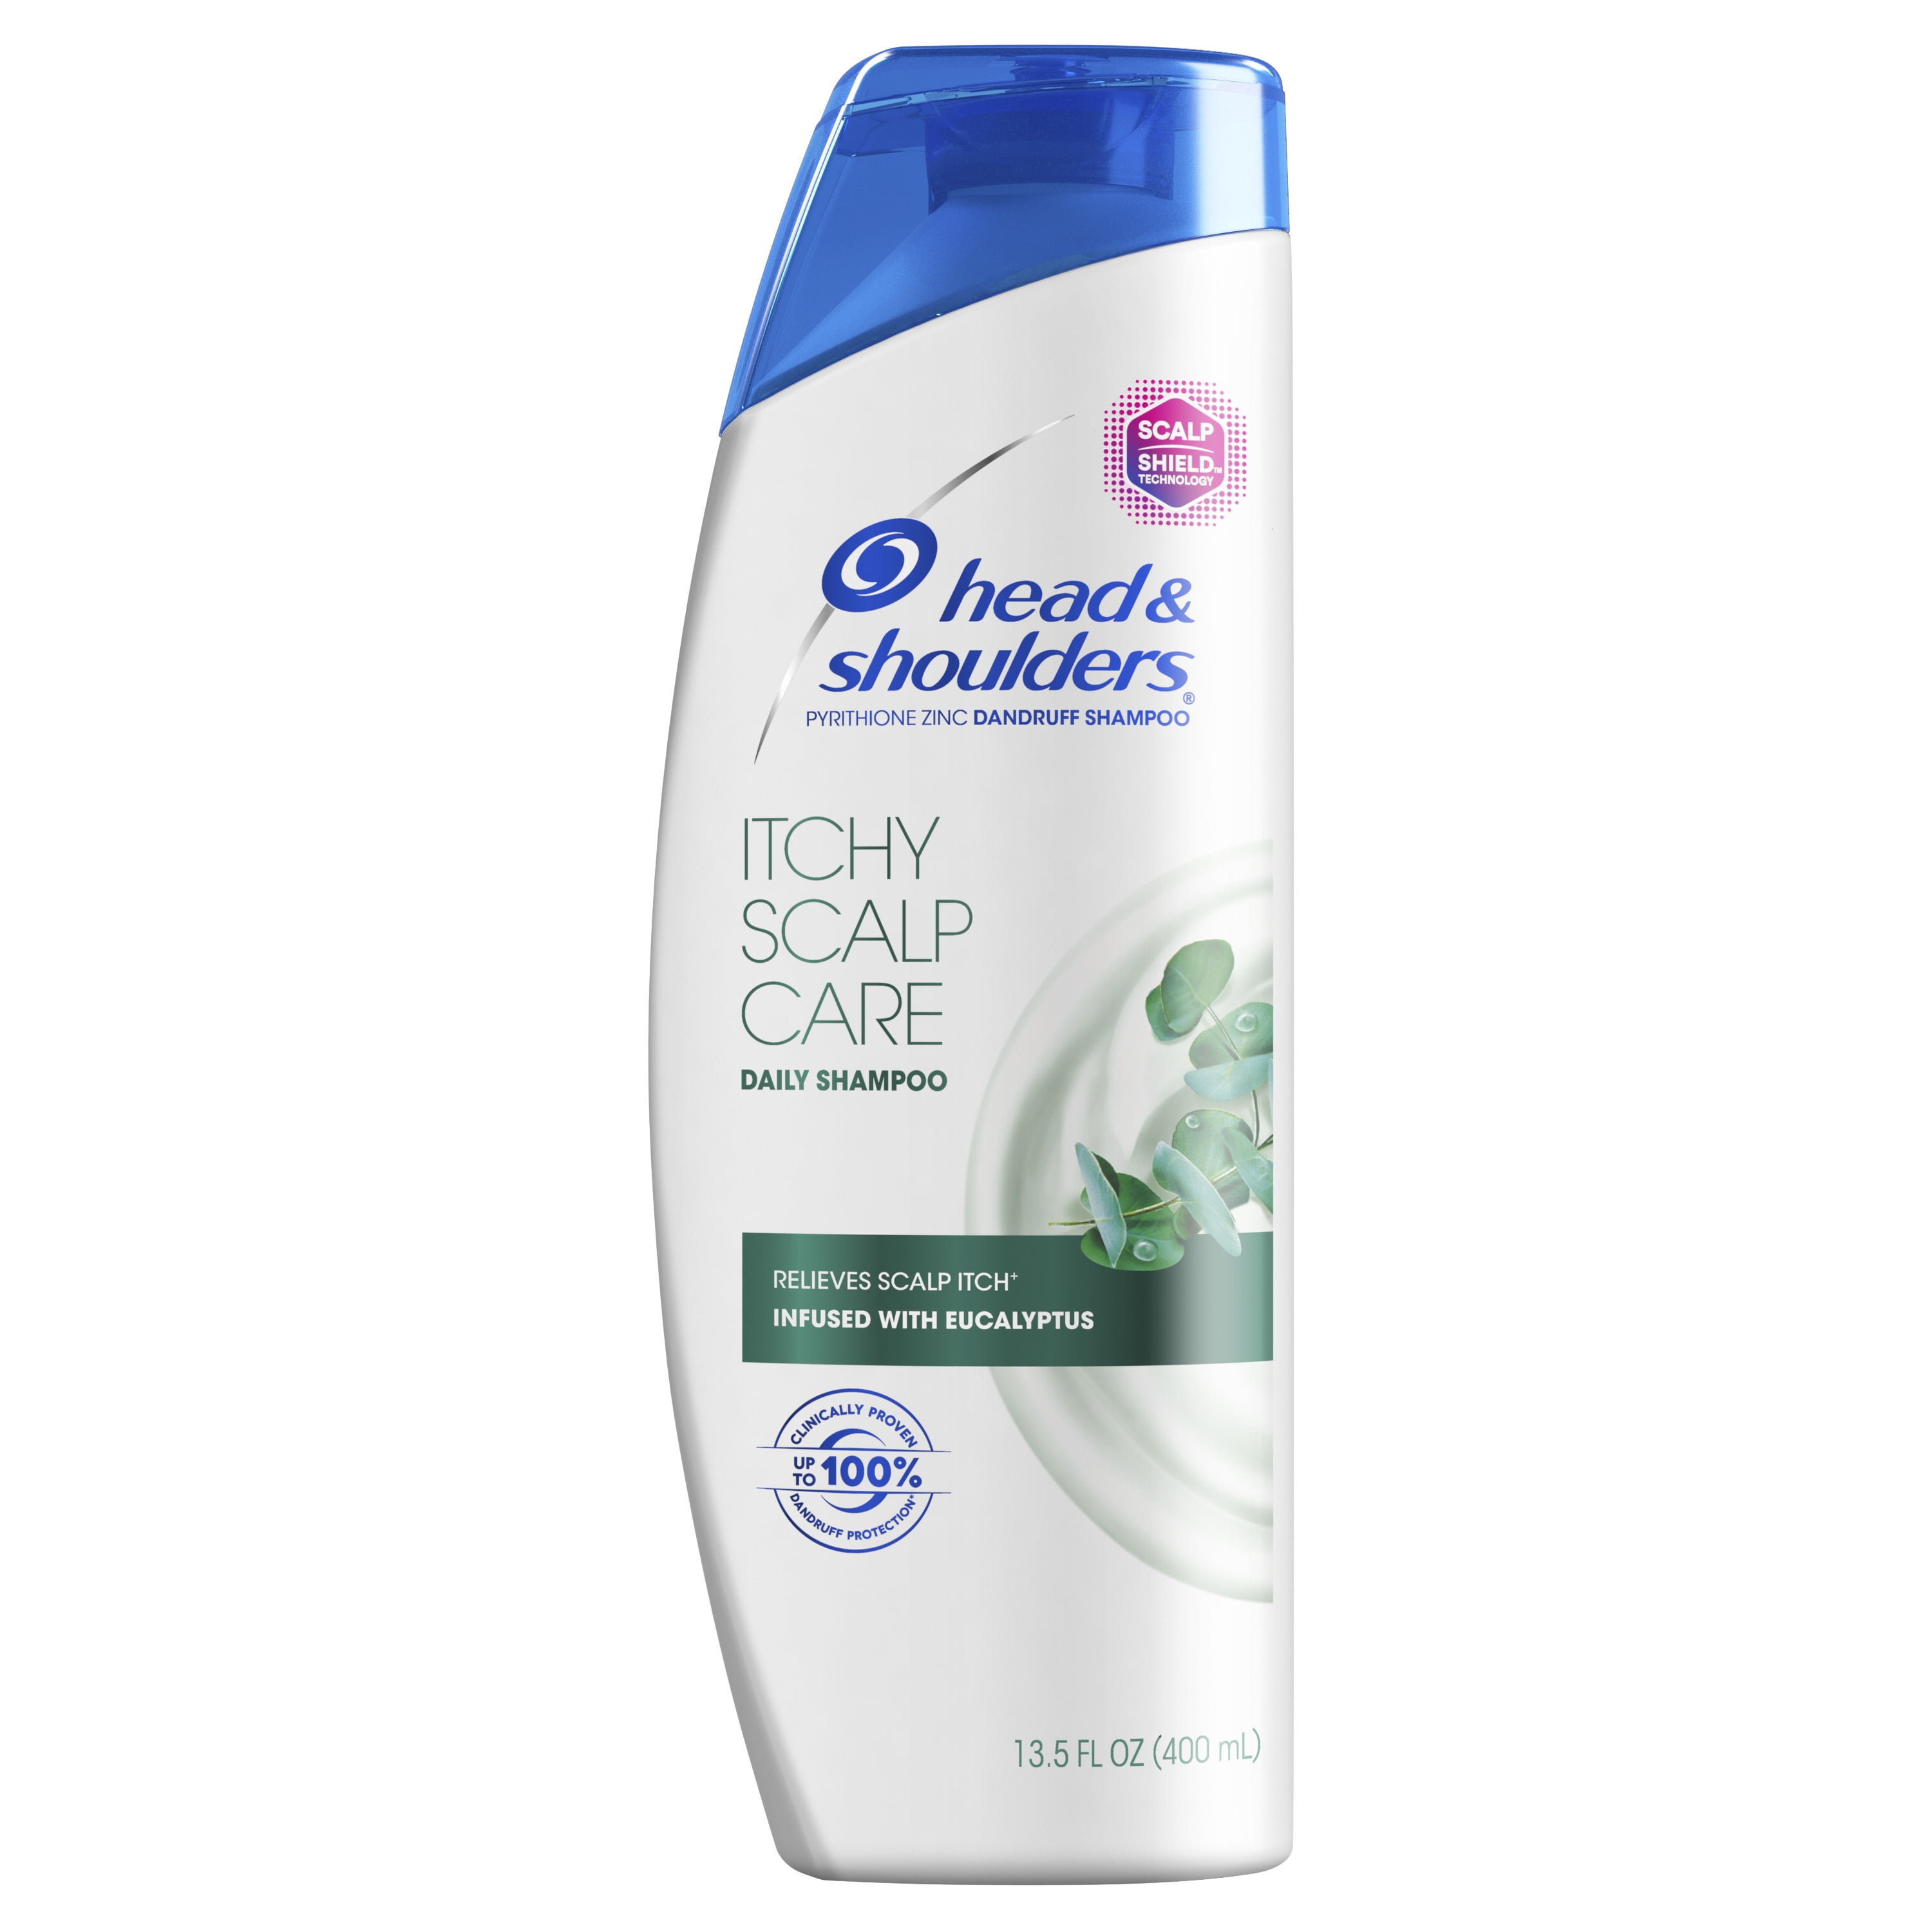 Head & Shoulders Dandruff Shampoo, Itchy Scalp Care, 13.5 fl oz